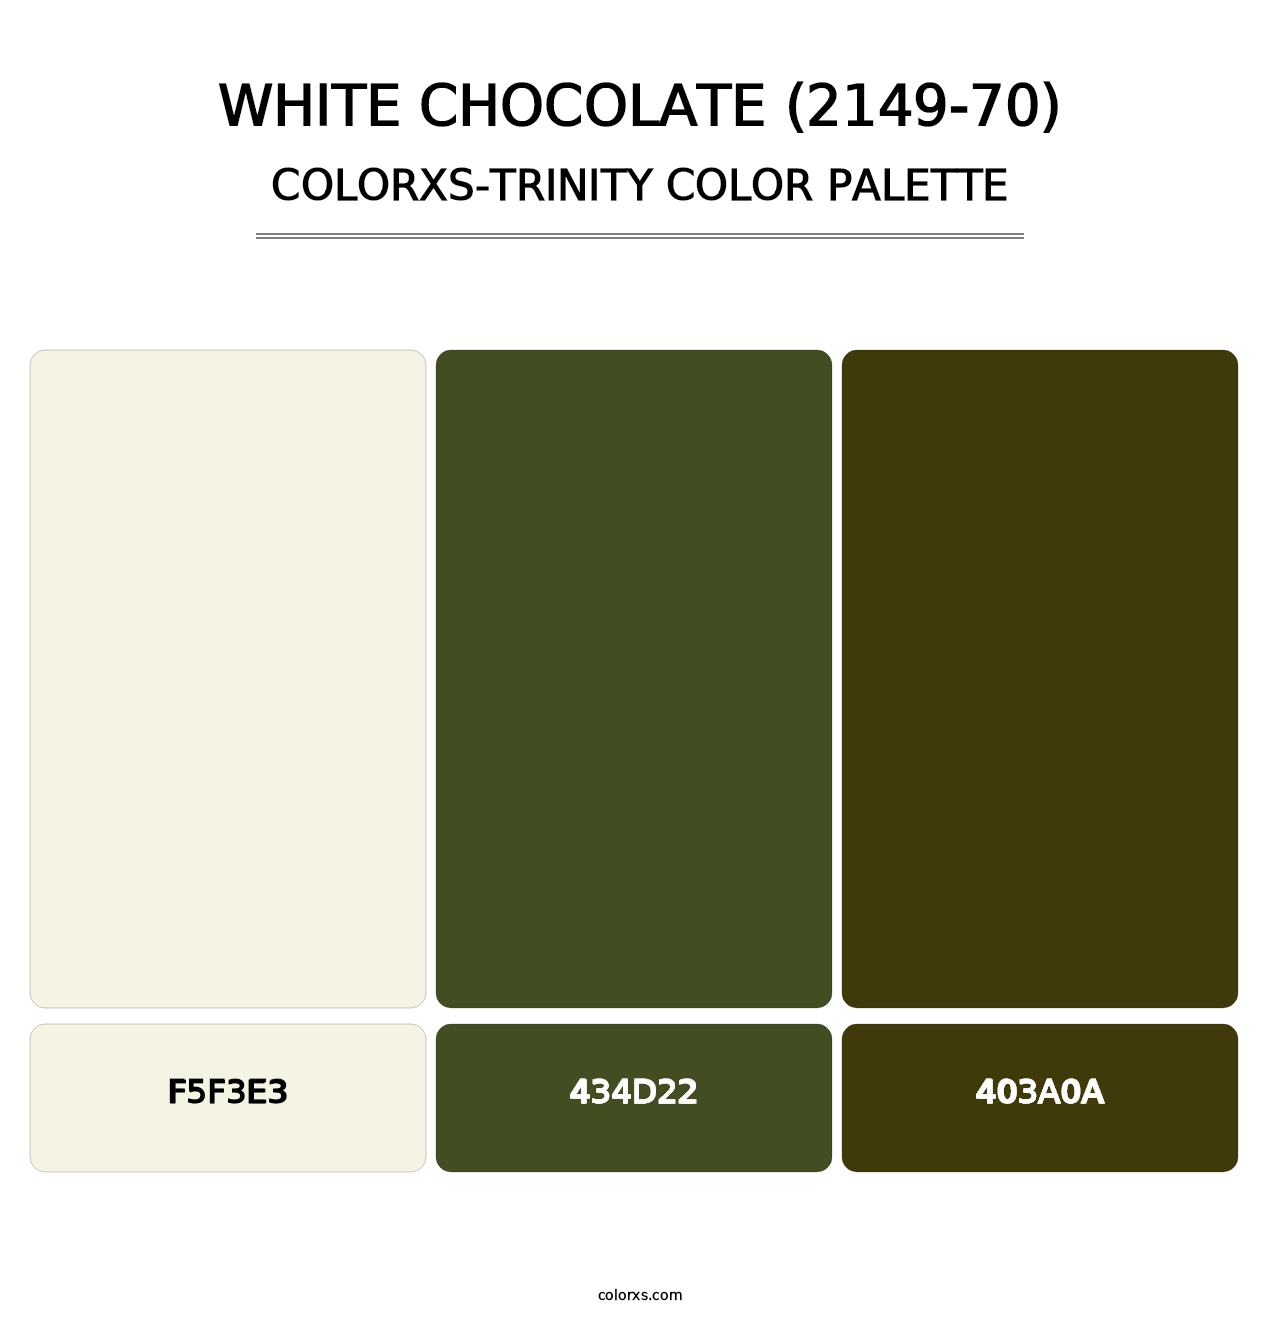 White Chocolate (2149-70) - Colorxs Trinity Palette